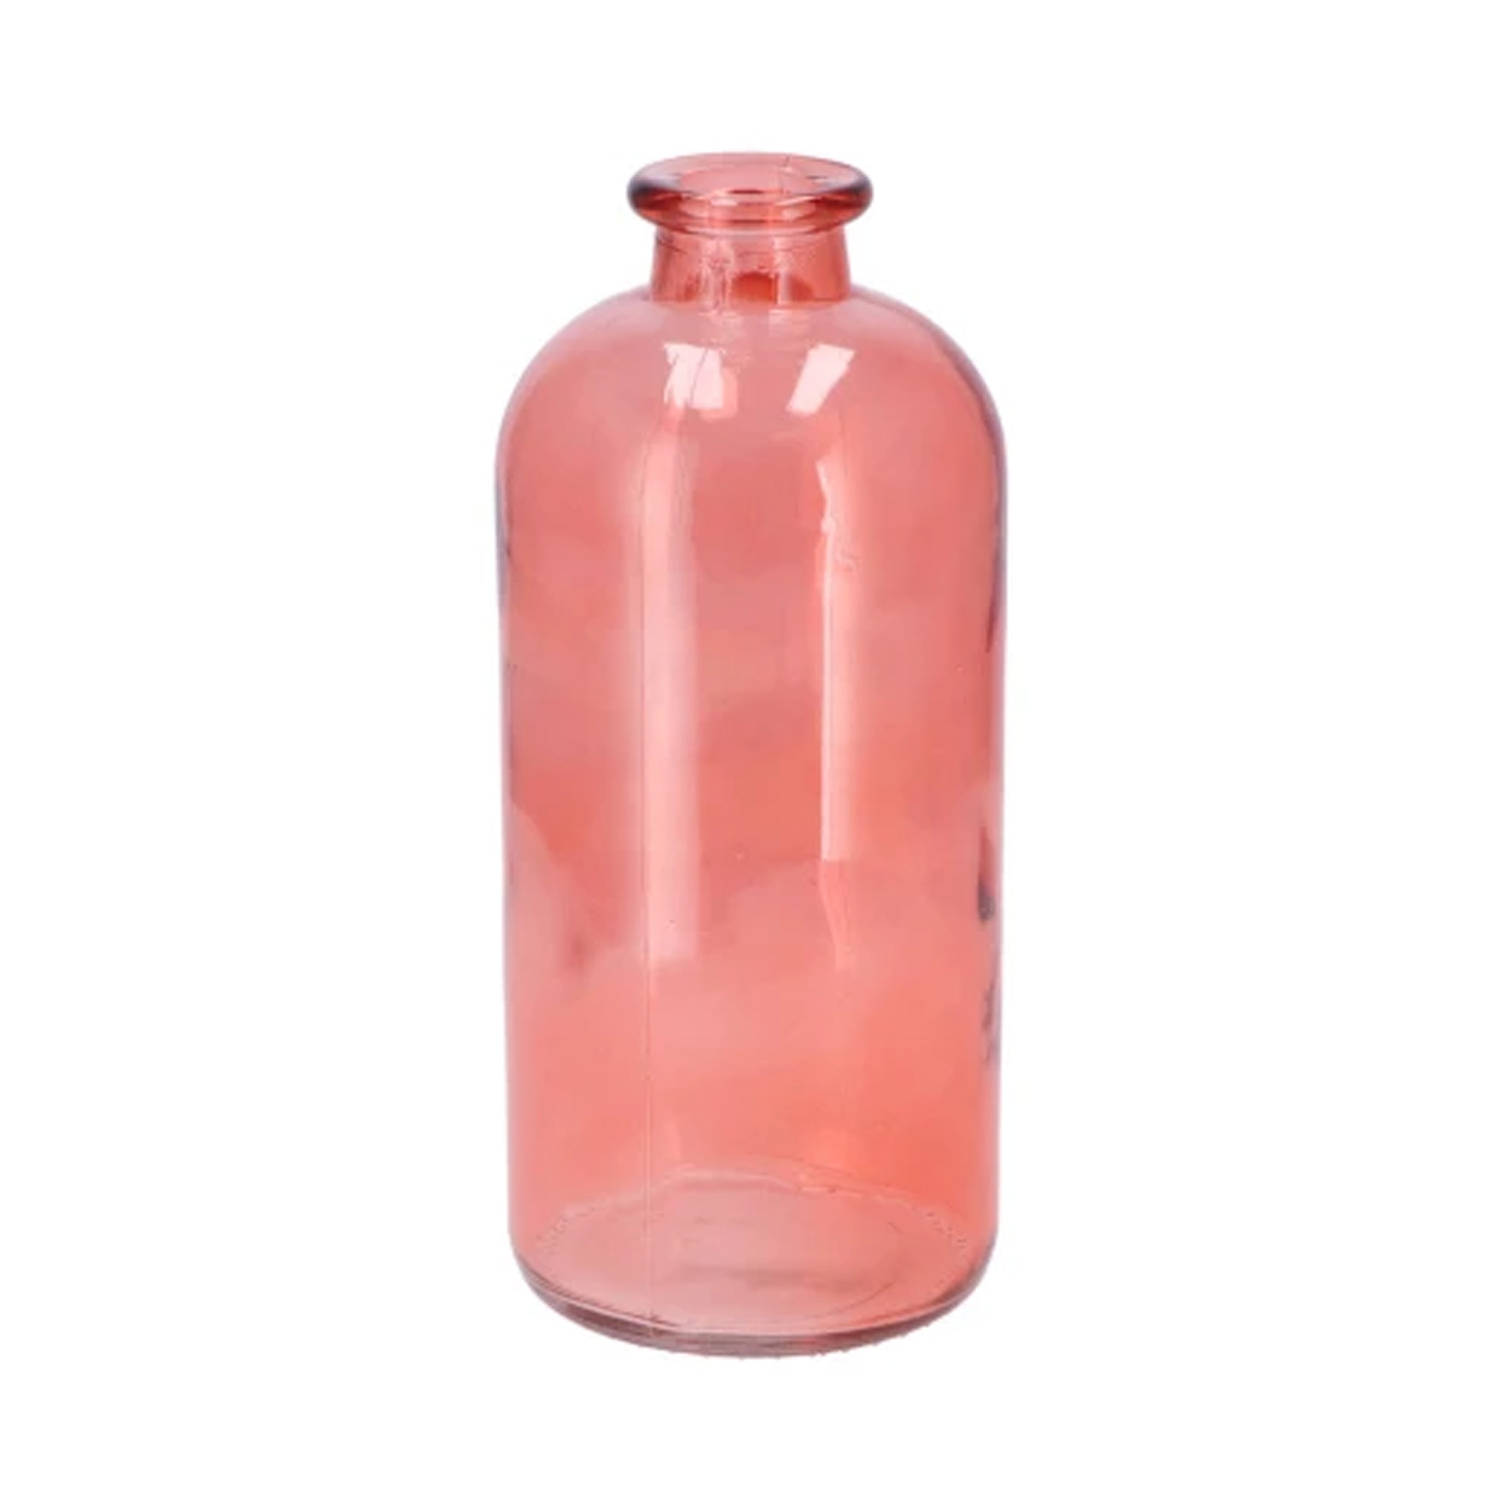 DK Design Bloemenvaas fles model - helder gekleurd glas - koraal roze - D11 x H25 cm